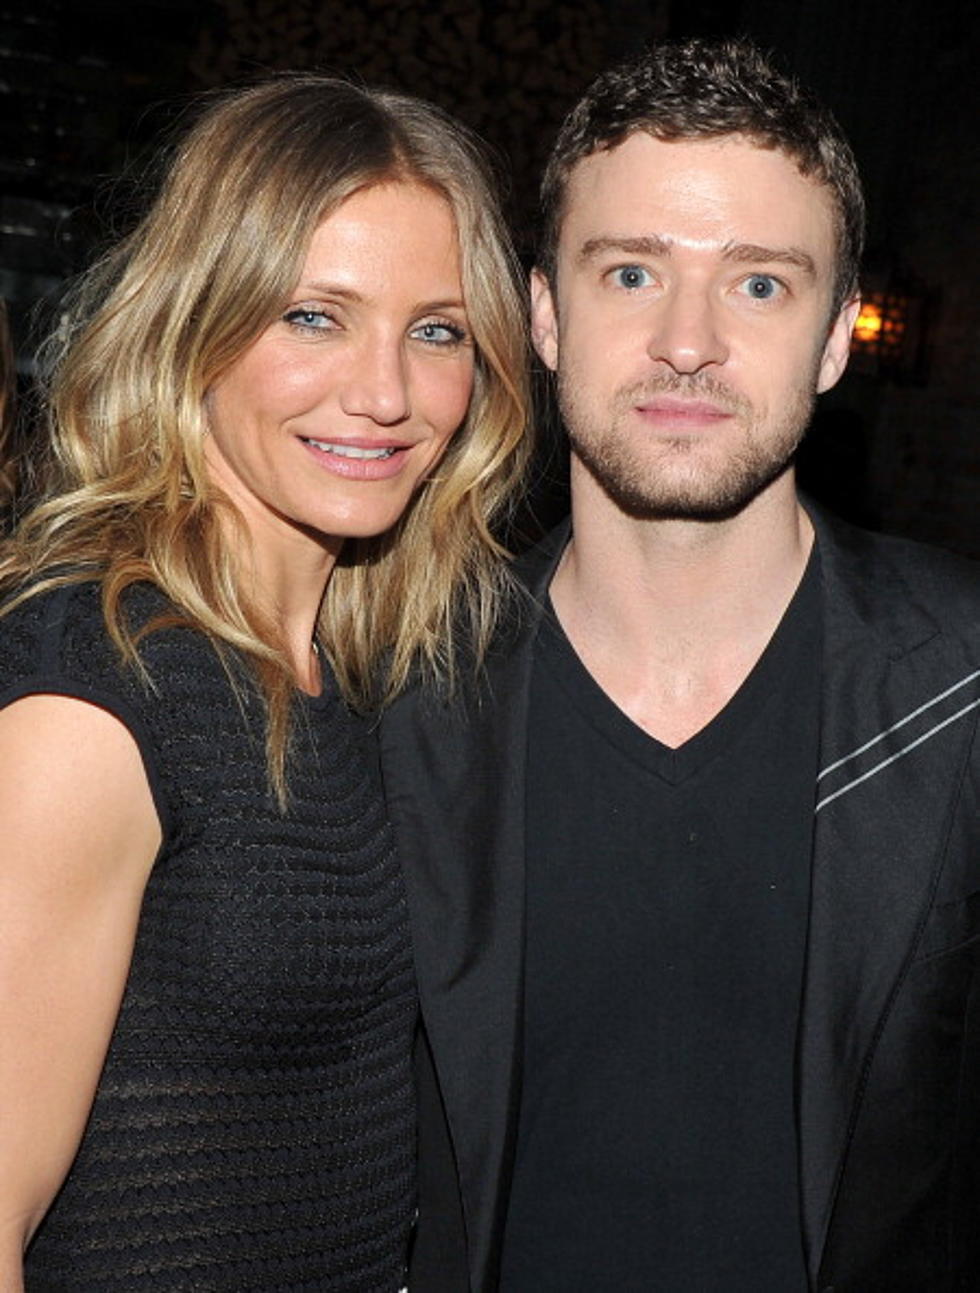 High-fashion couple! Justin Timberlake and Jessica Biel hit Paris